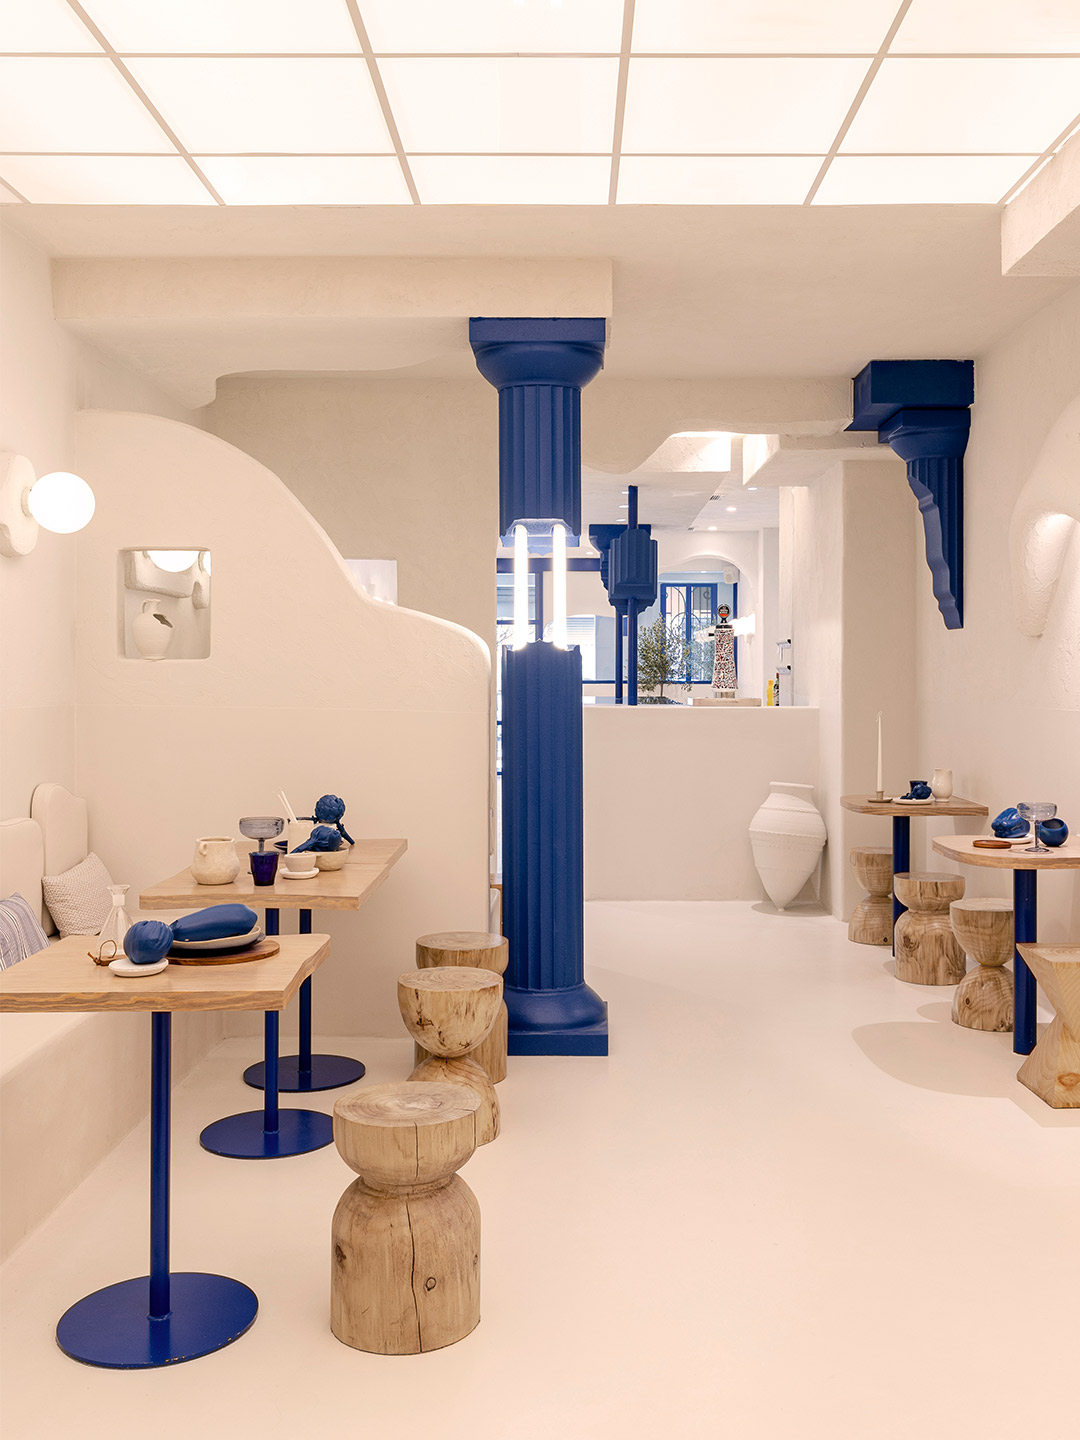 Egeo Greek restaurant in Greece by Masquespacio